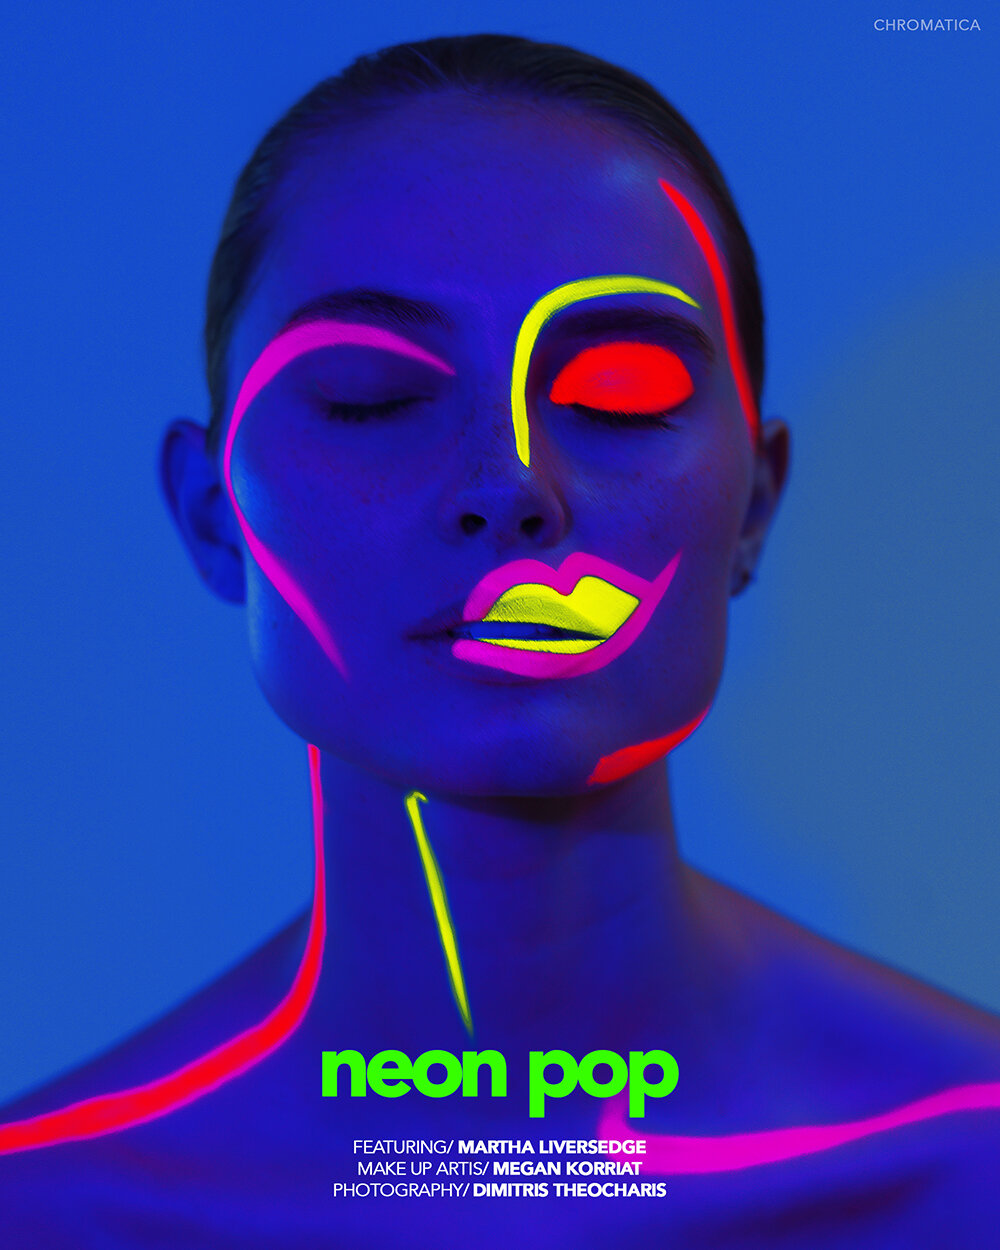 neon pop titles copy.jpg